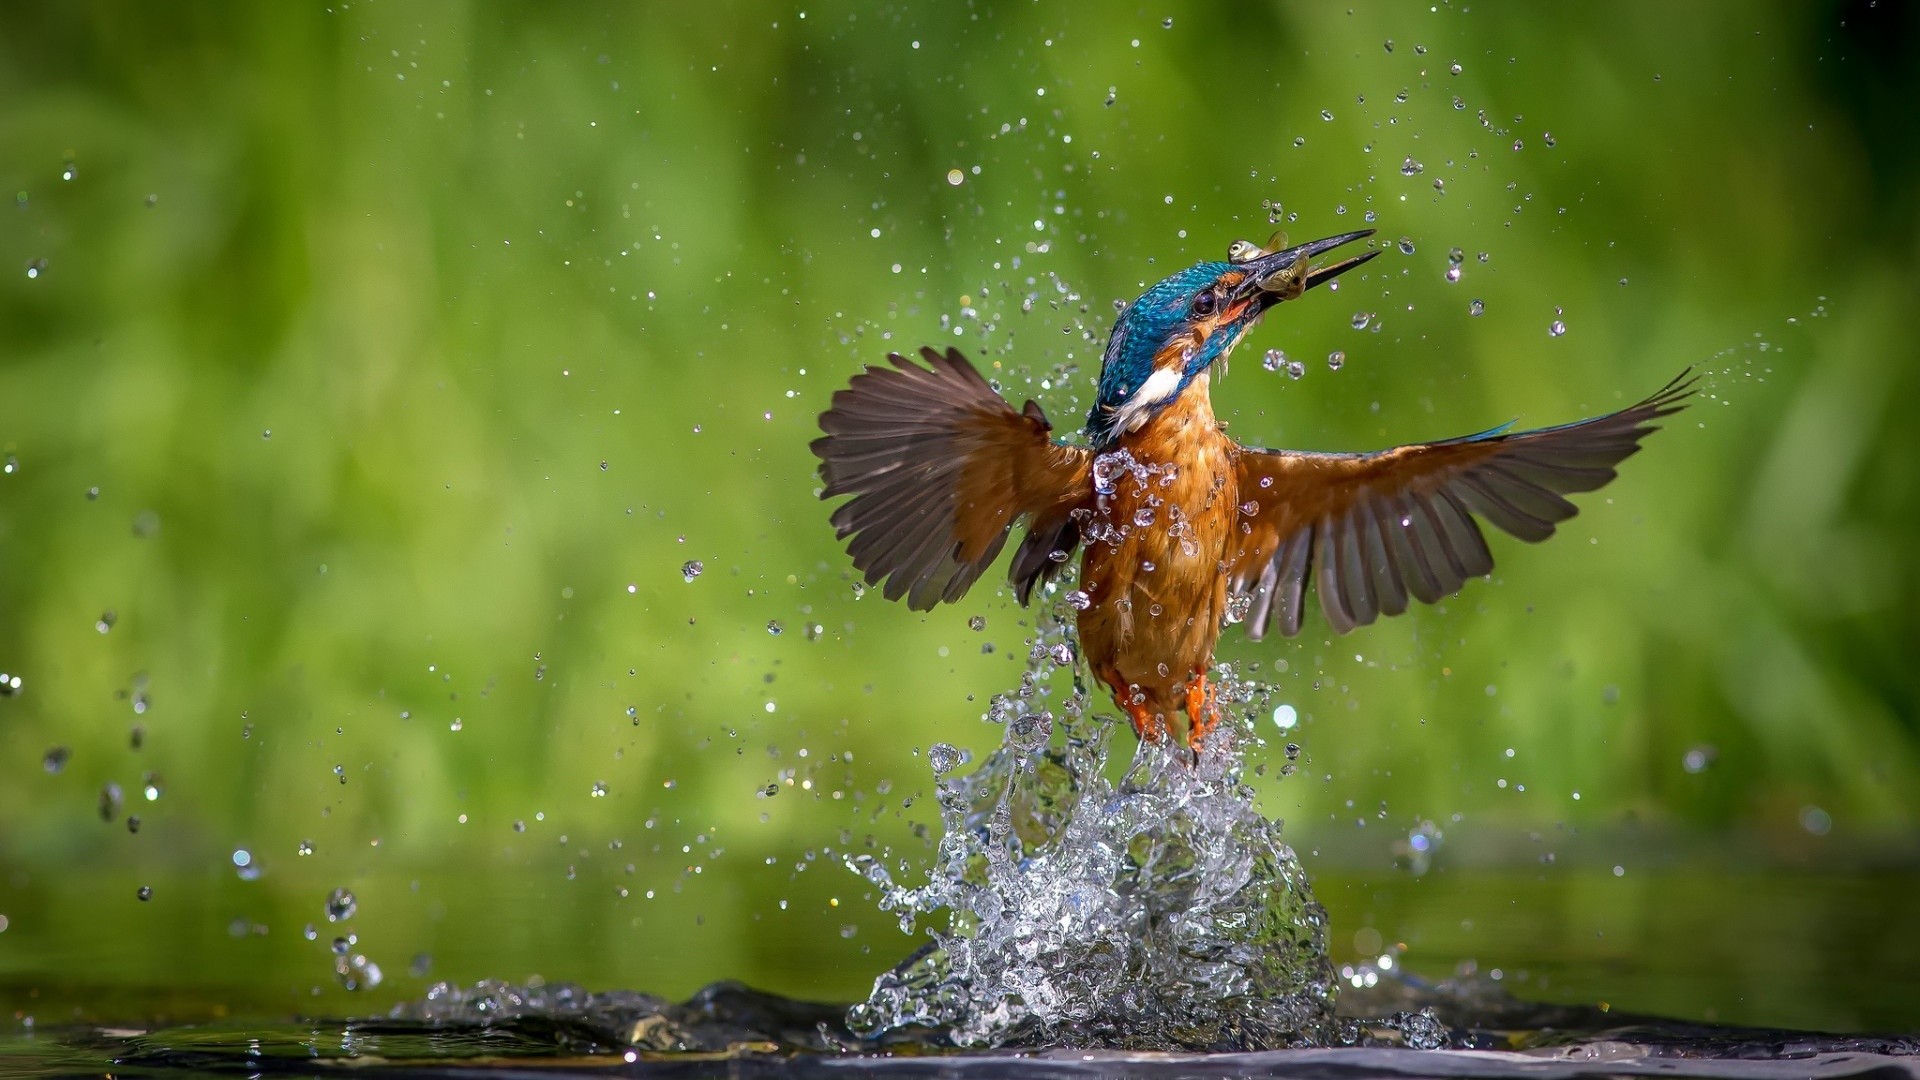 General 1920x1080 nature animals birds kingfisher water drops green background long exposure water